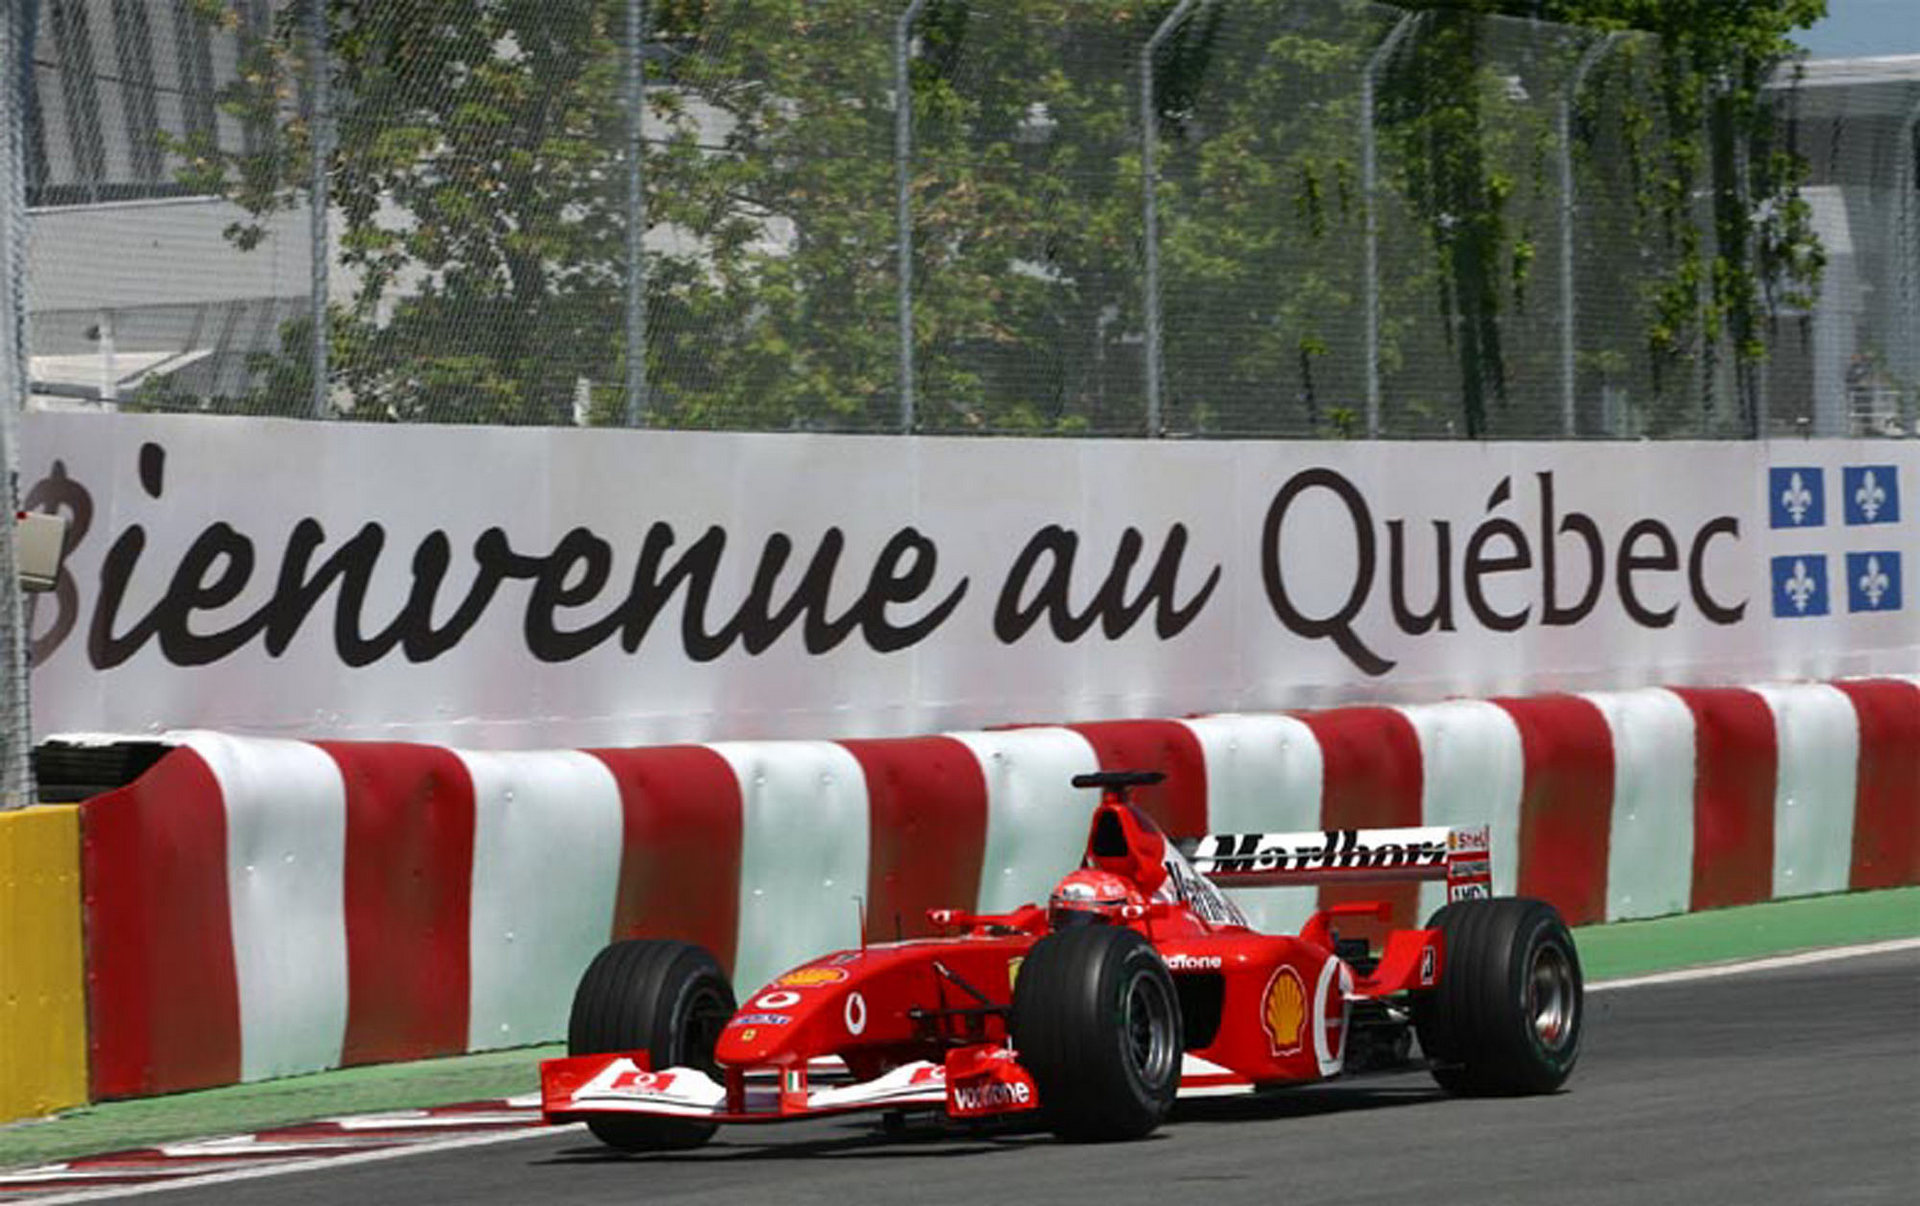 HD Wallpaper Formula Grand Prix Of Canada F1 Fansite